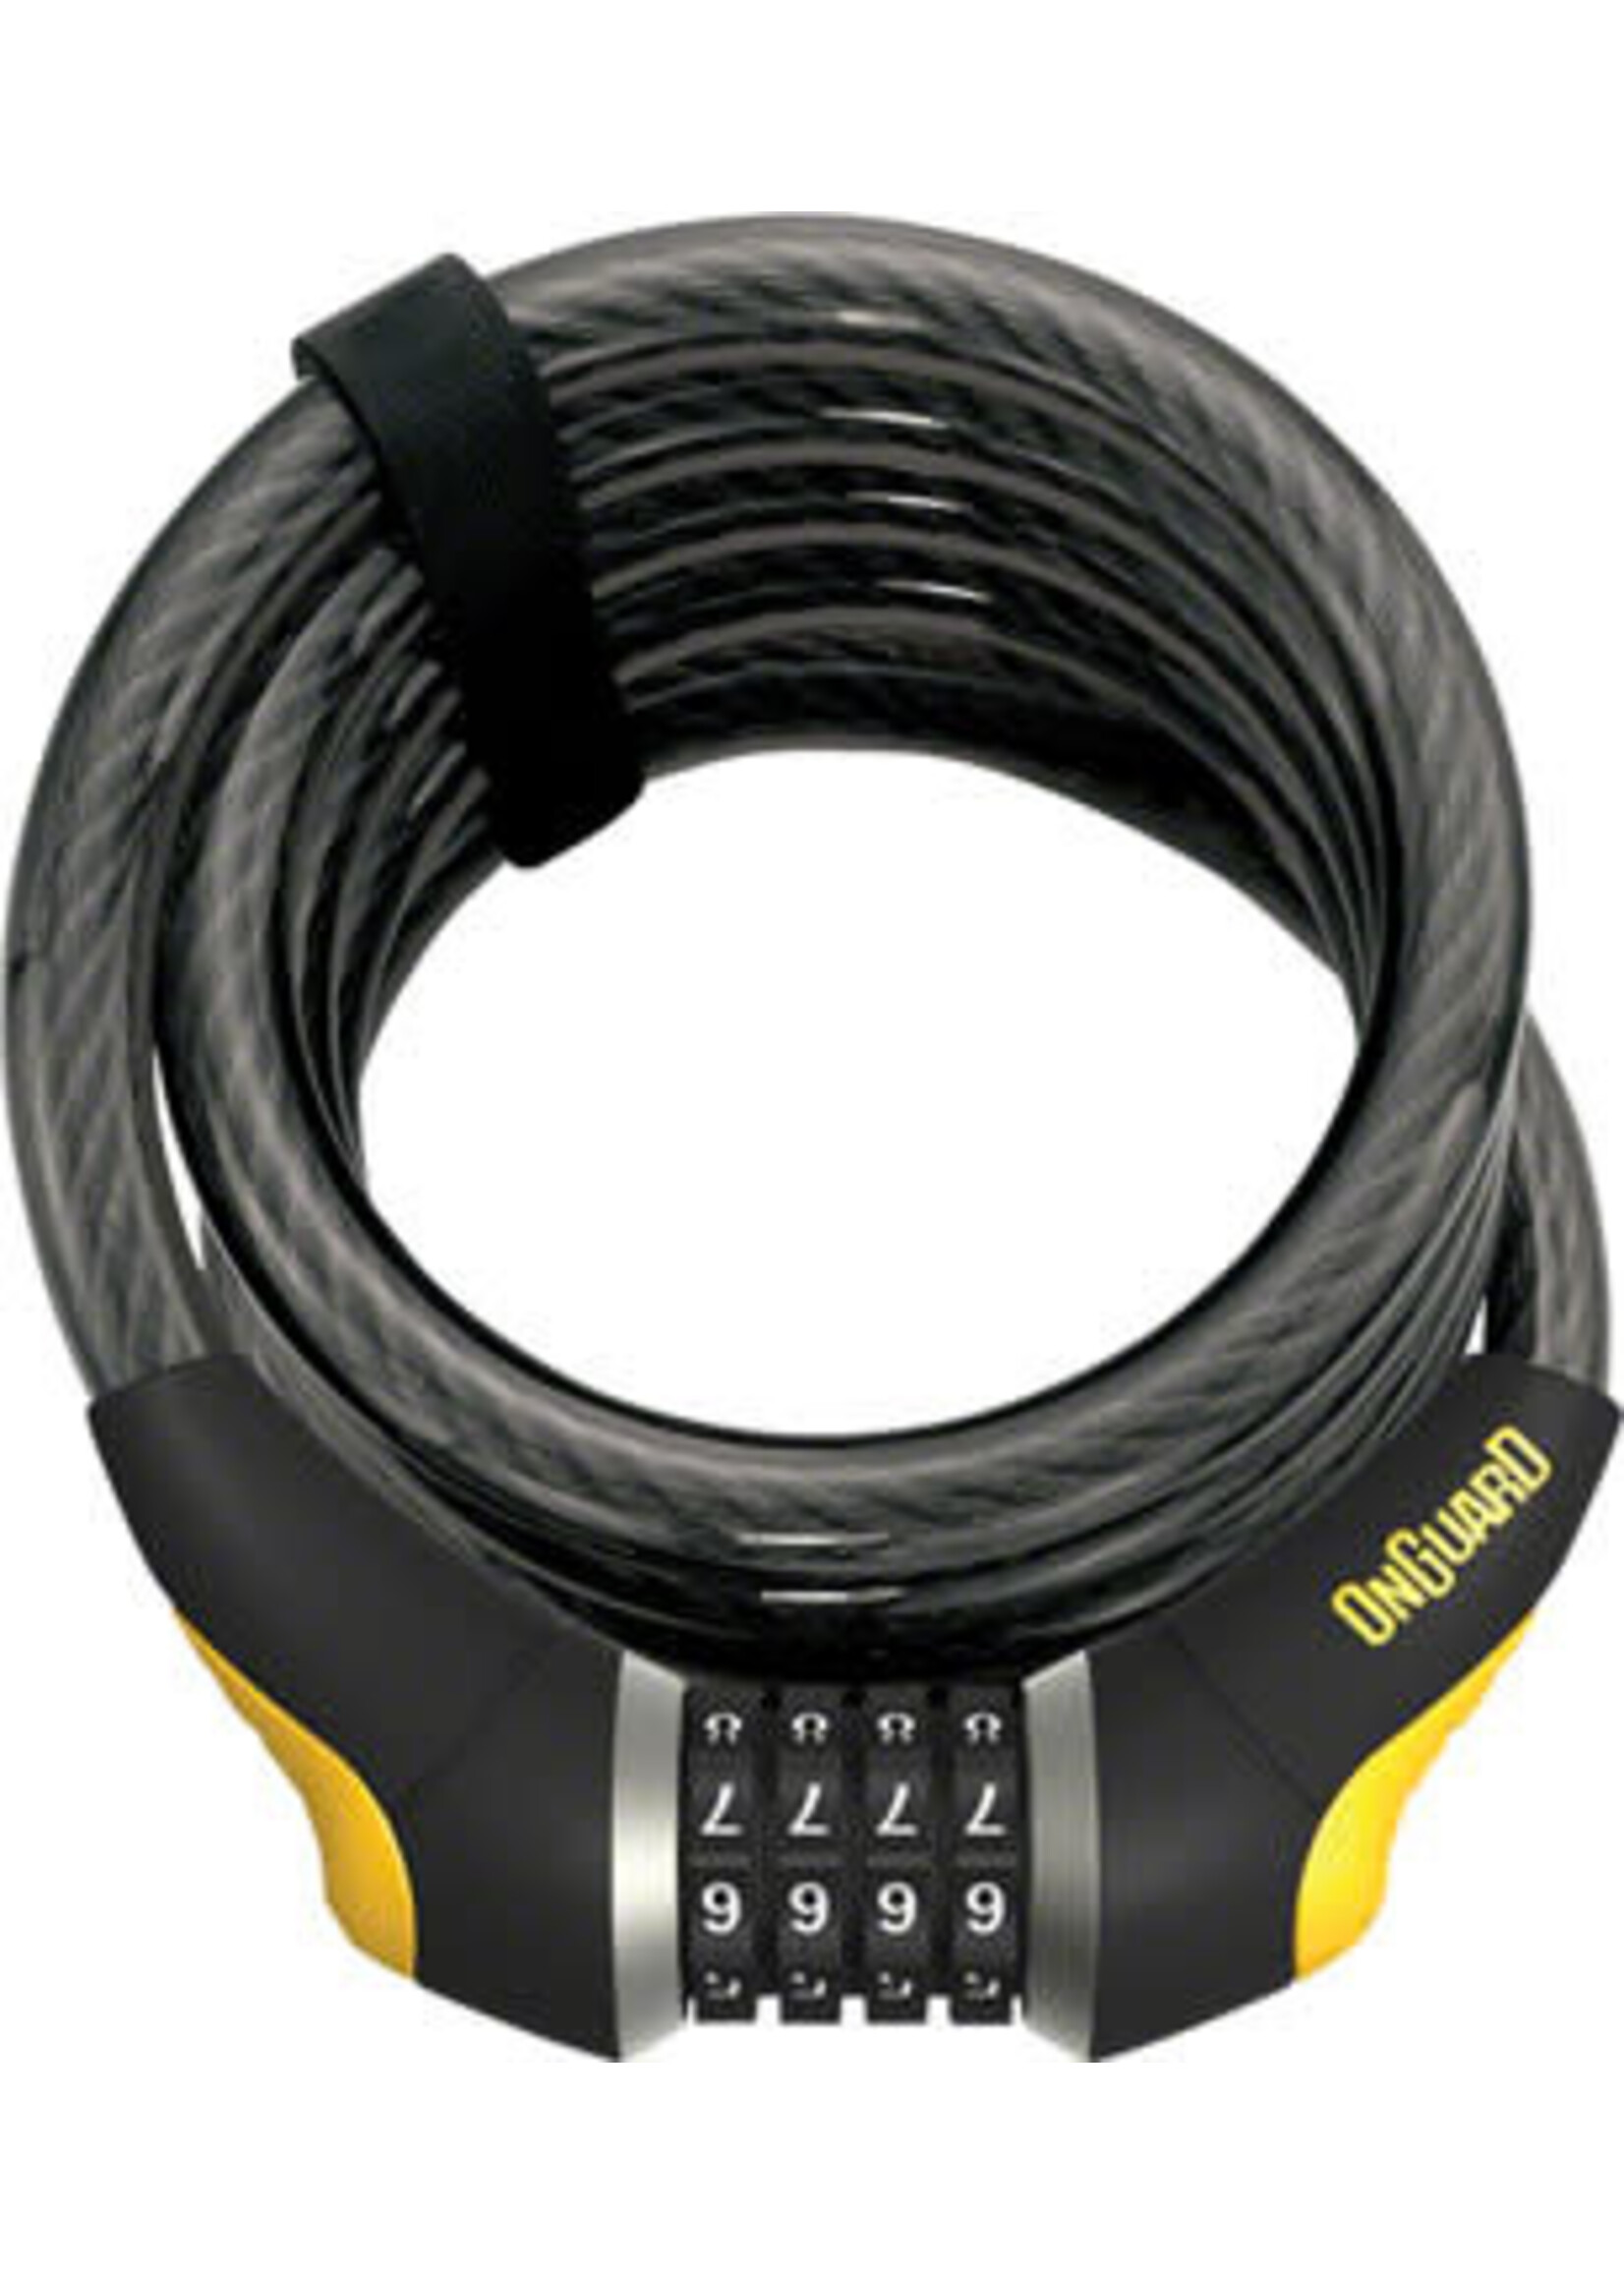 ONGUARD OnGuard Doberman Combo Cable Lock: 6' x 15mm, Gray/Black/Yellow